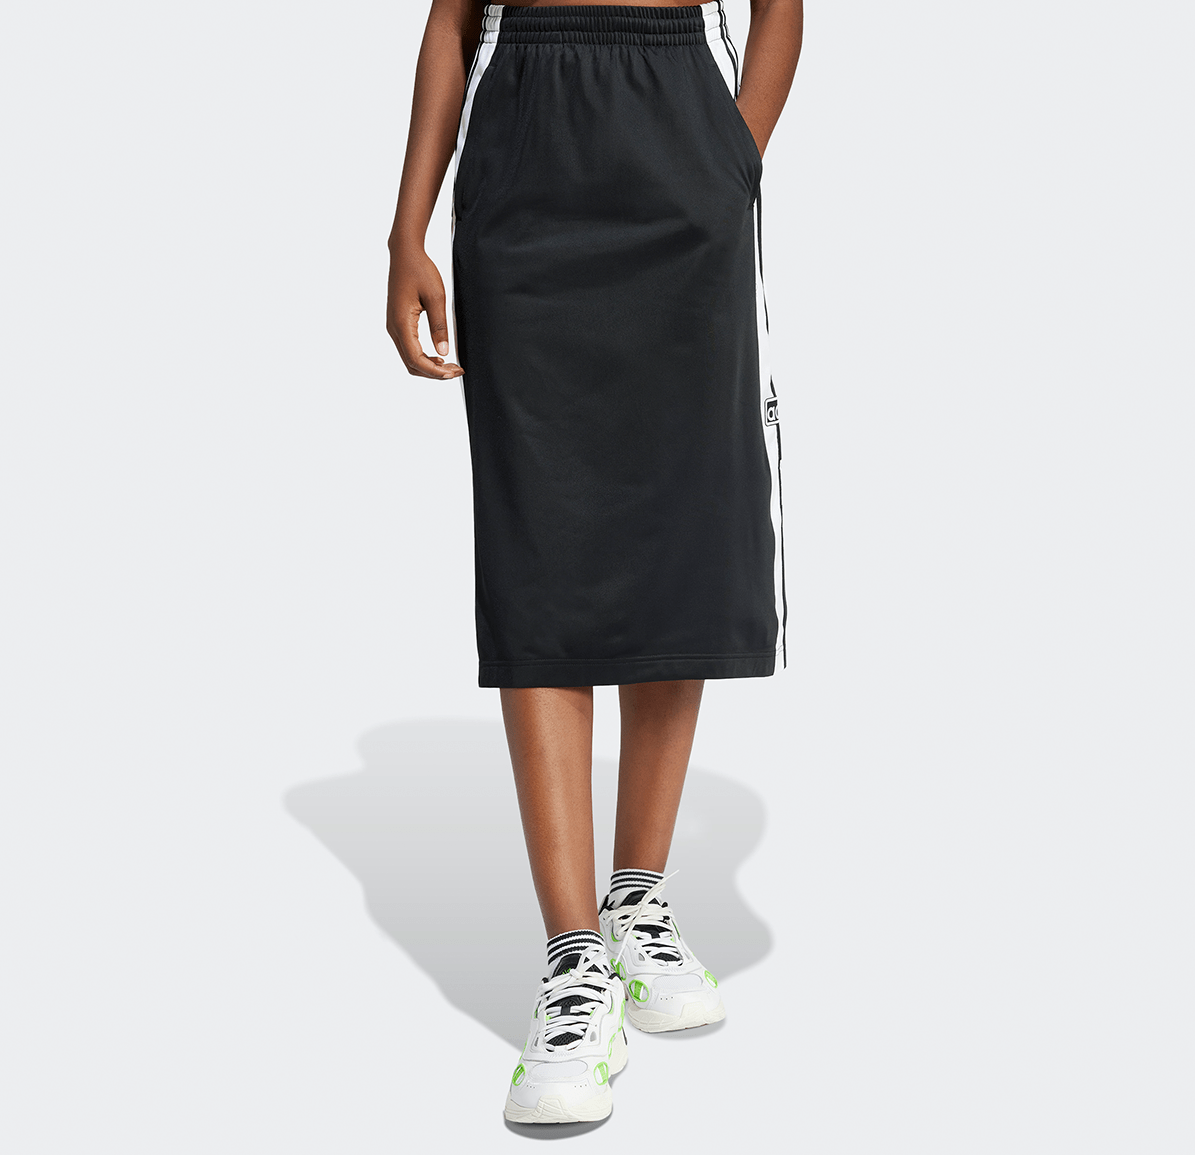 Adidas Adibreak Skirt - Black - Adidas - State Of Play